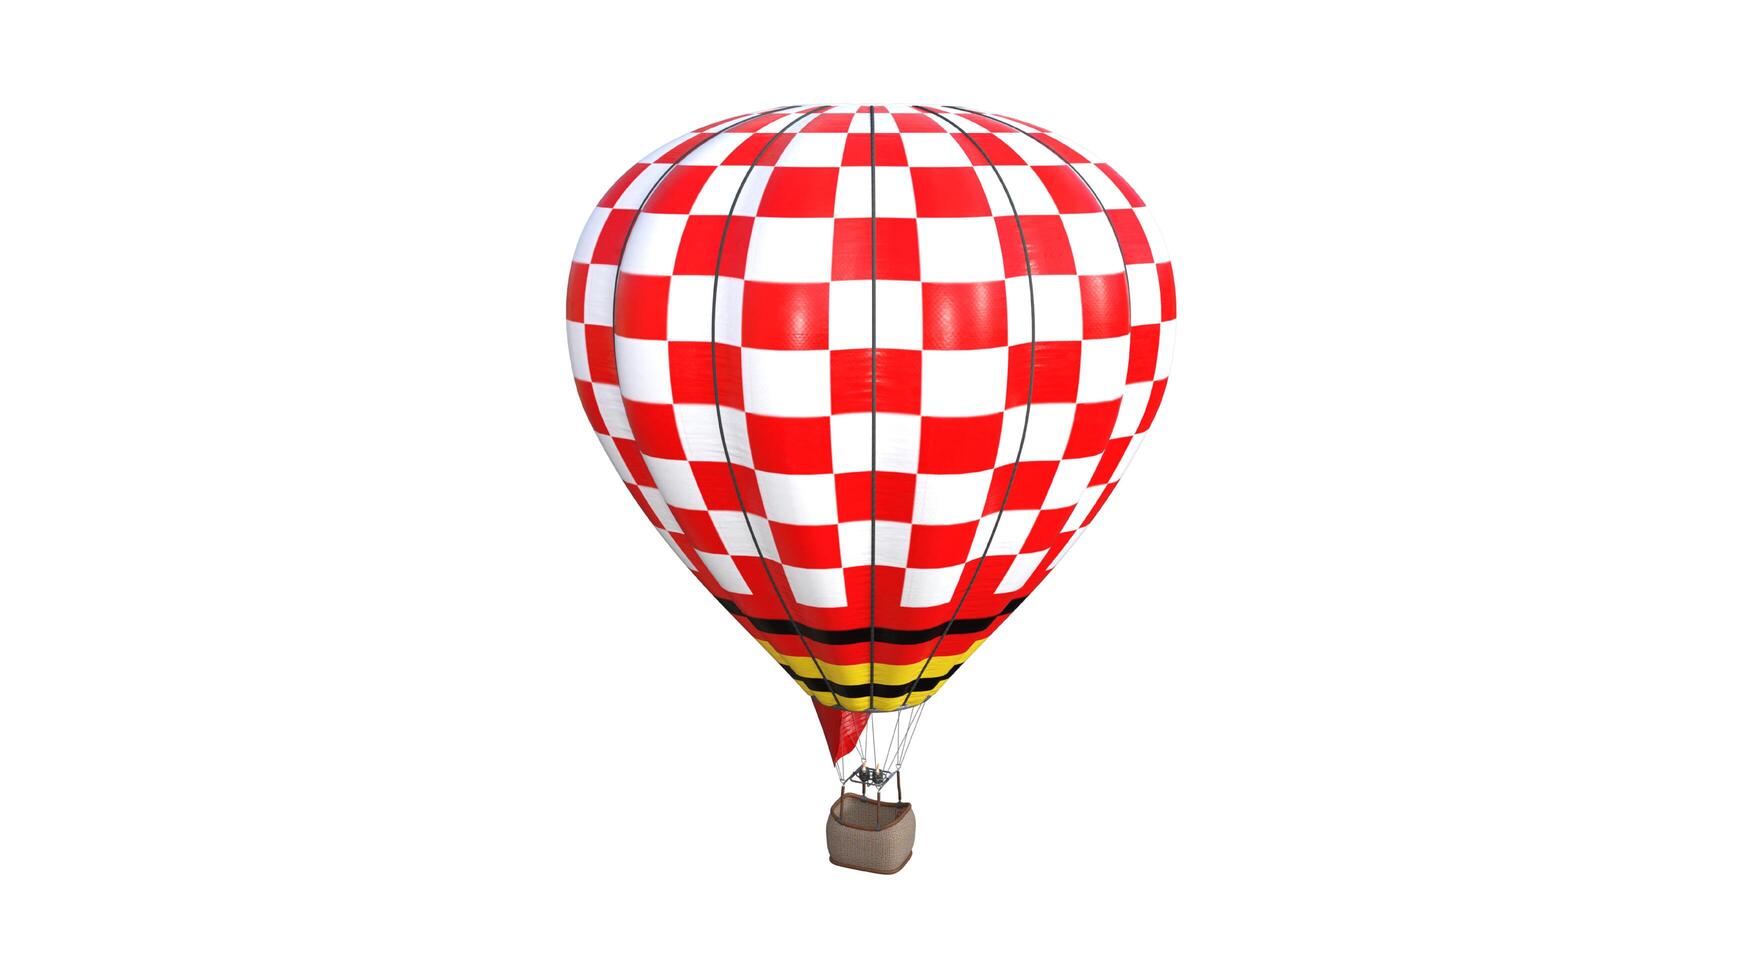 hot air balloon on white background photo